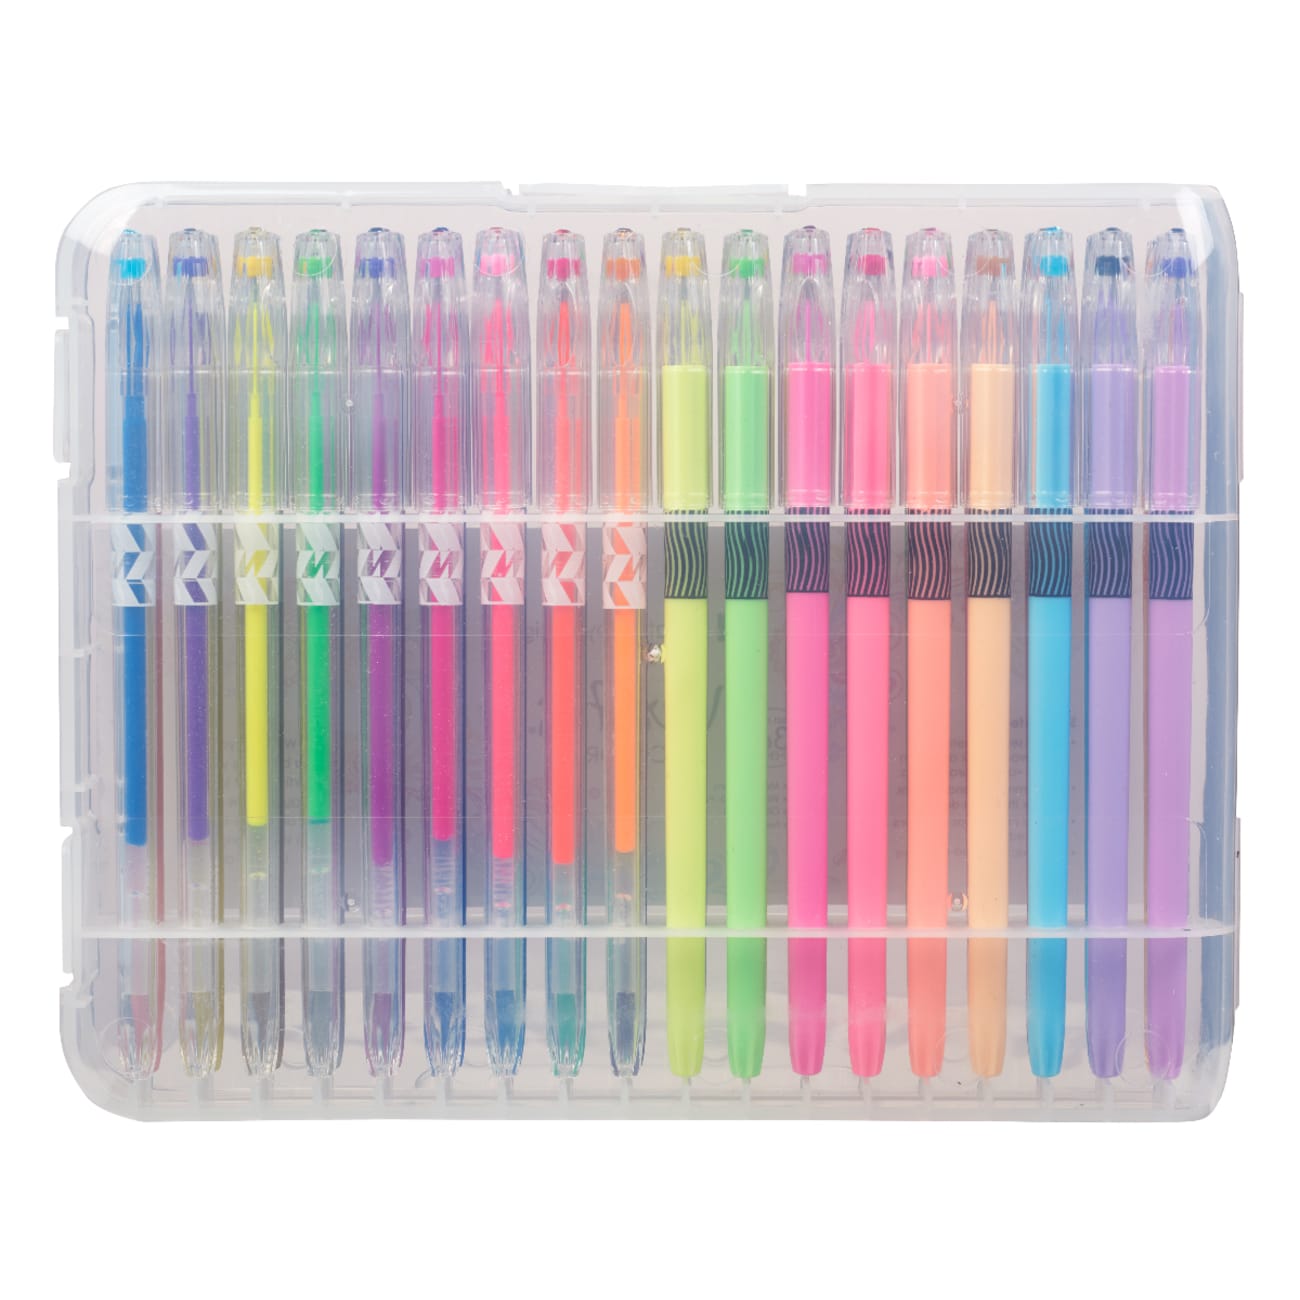 Veritas Gel Pen Set of 36Pc Assortment: 9x Metallic Pens, 9x Glitter Pens, 9x Water Chalk Pens, 9x Neon Pens Stationery